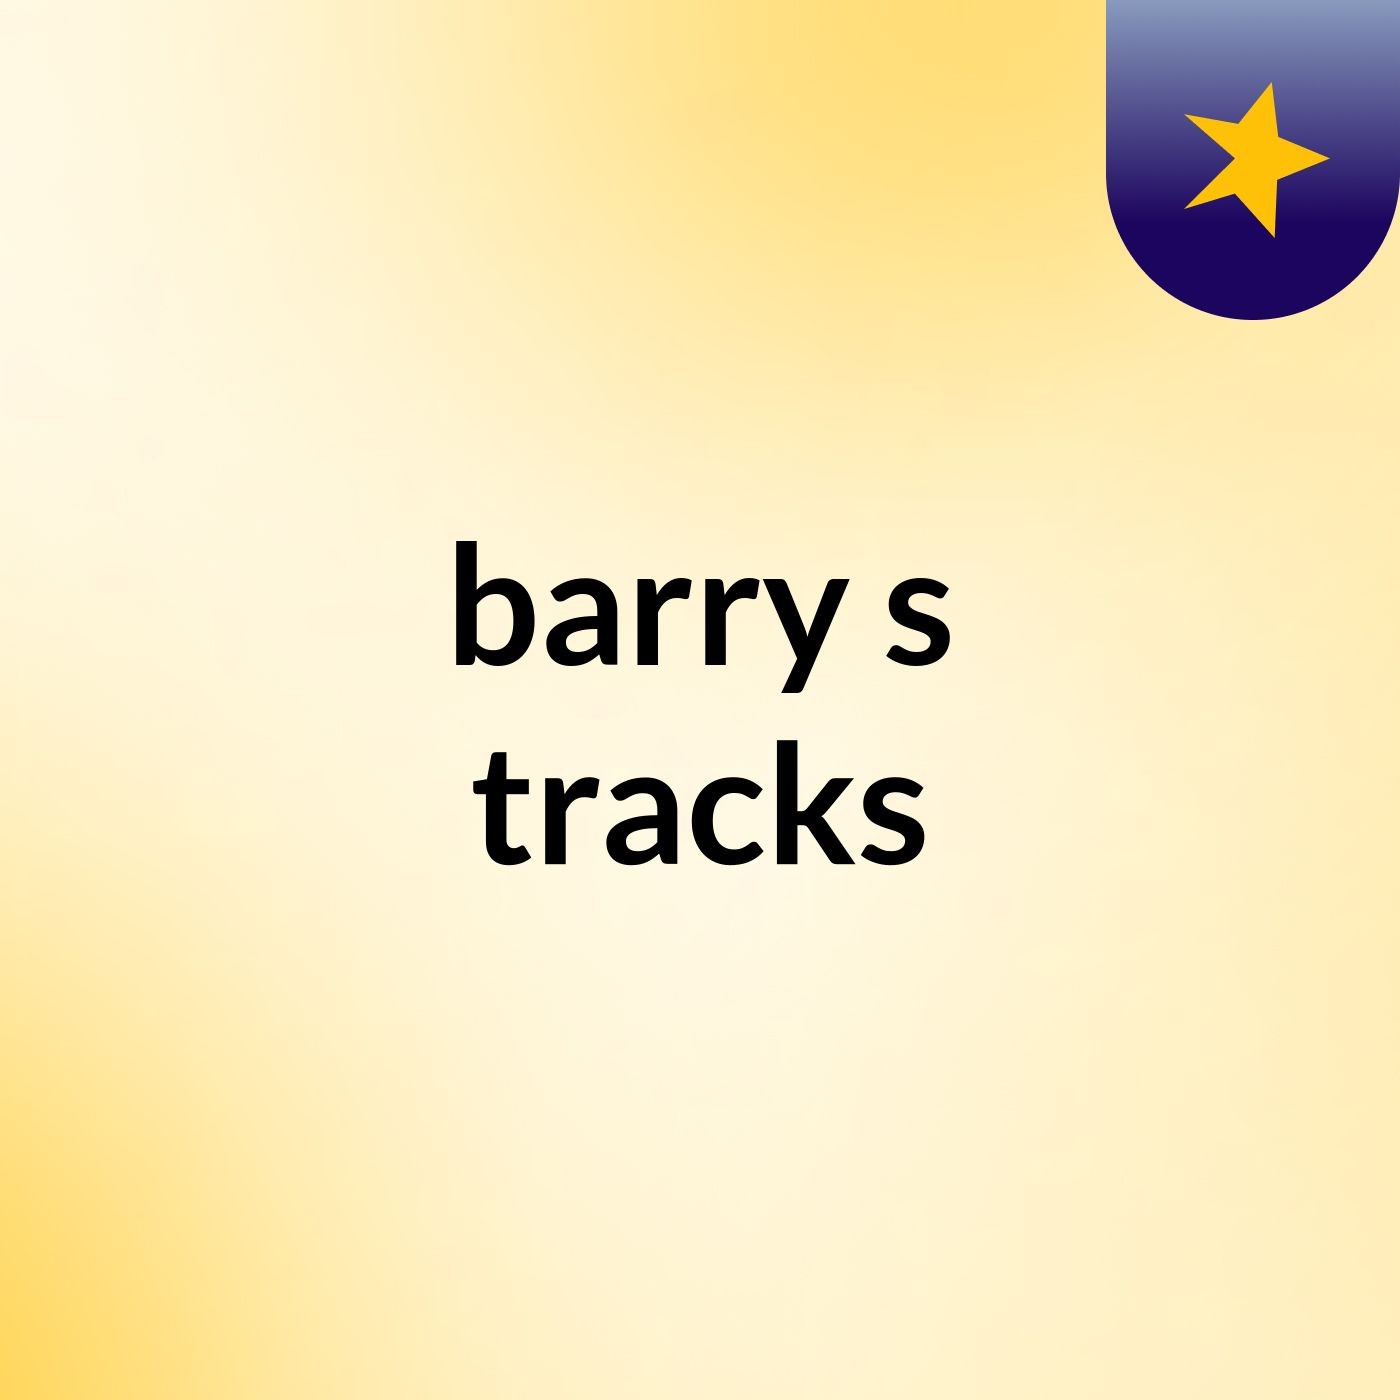 barry's tracks